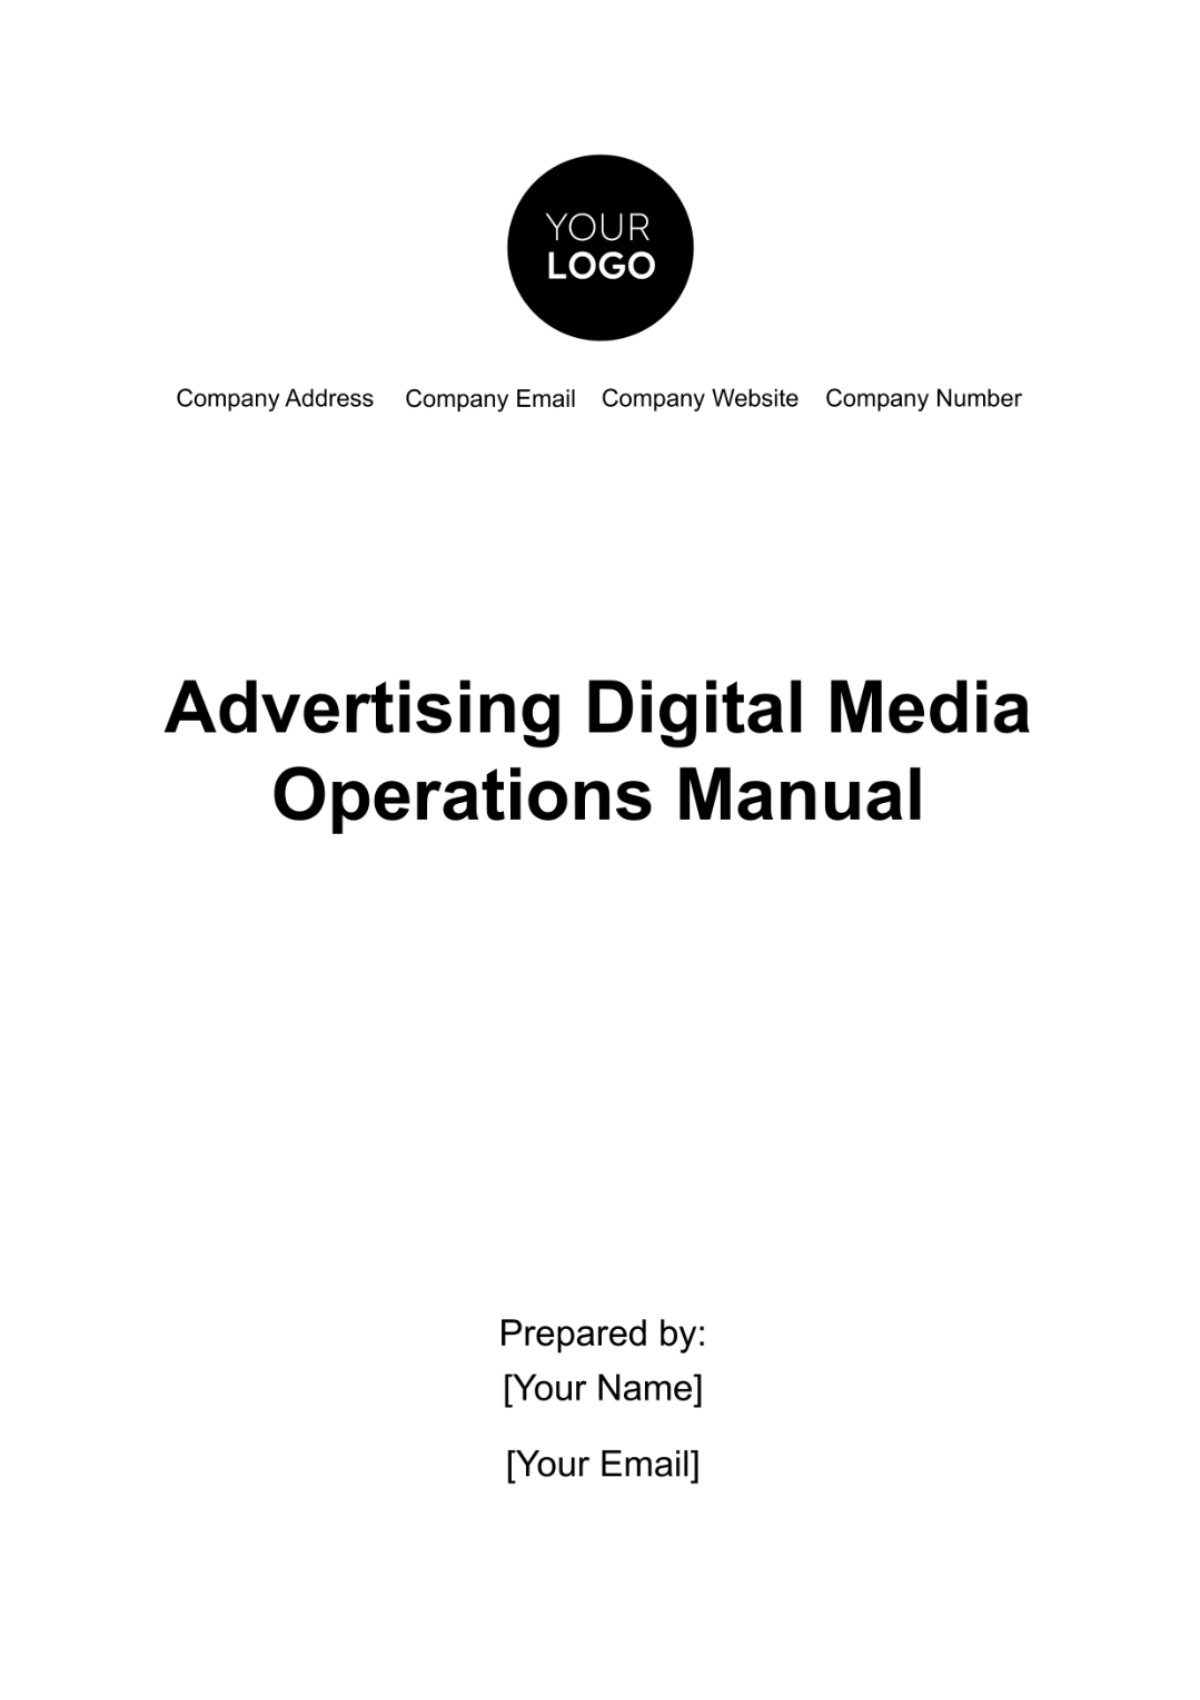 Advertising Digital Media Operations Manual Template